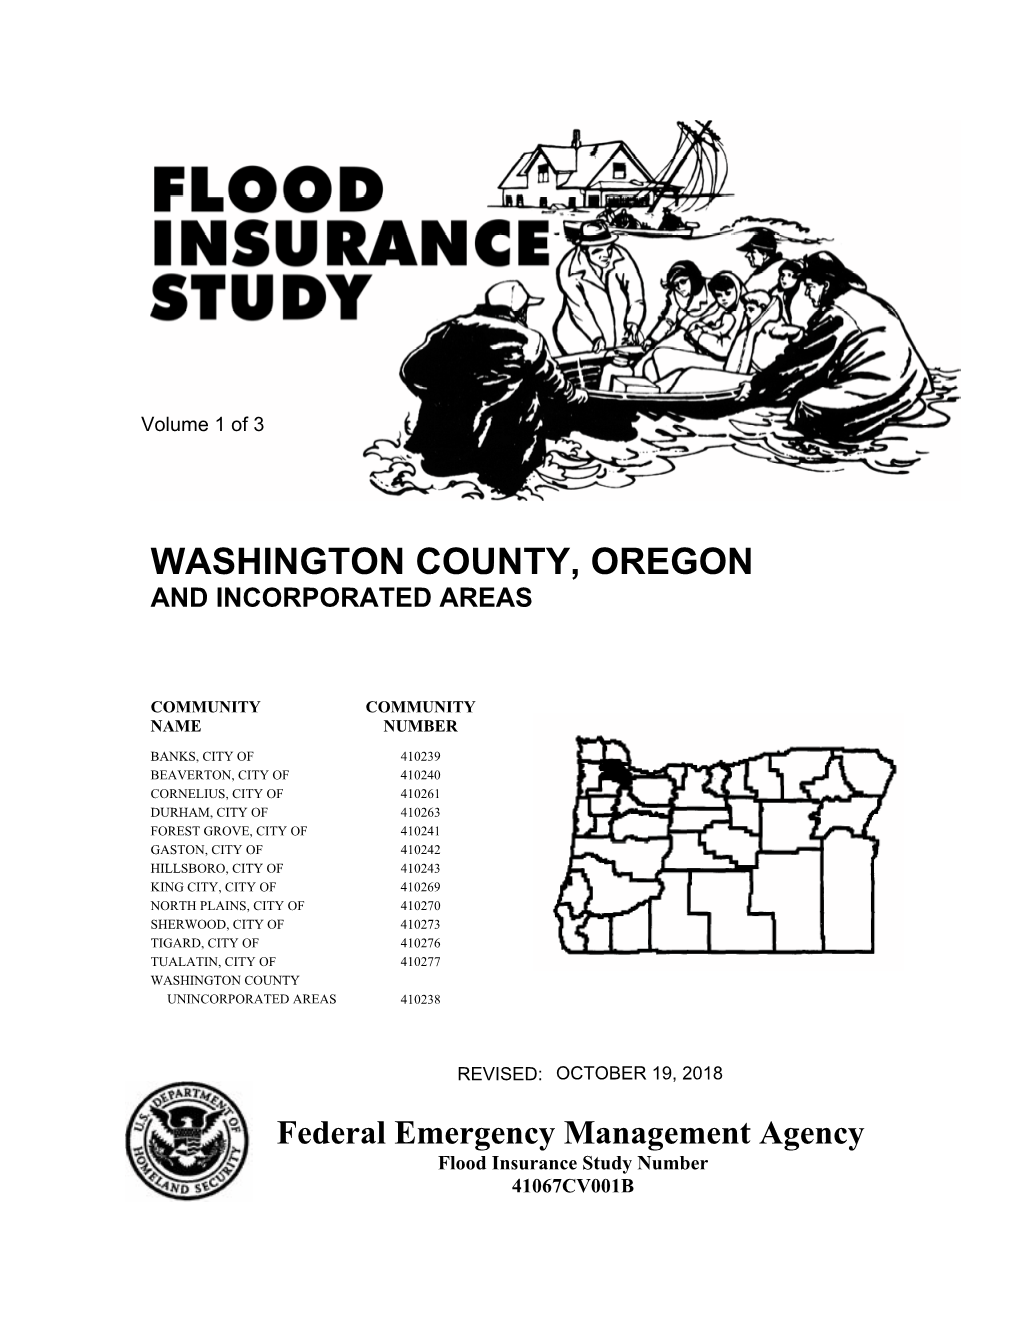 Flood Insurance Study Number 41067CV001B NOTICE to FLOOD INSURANCE STUDY USERS